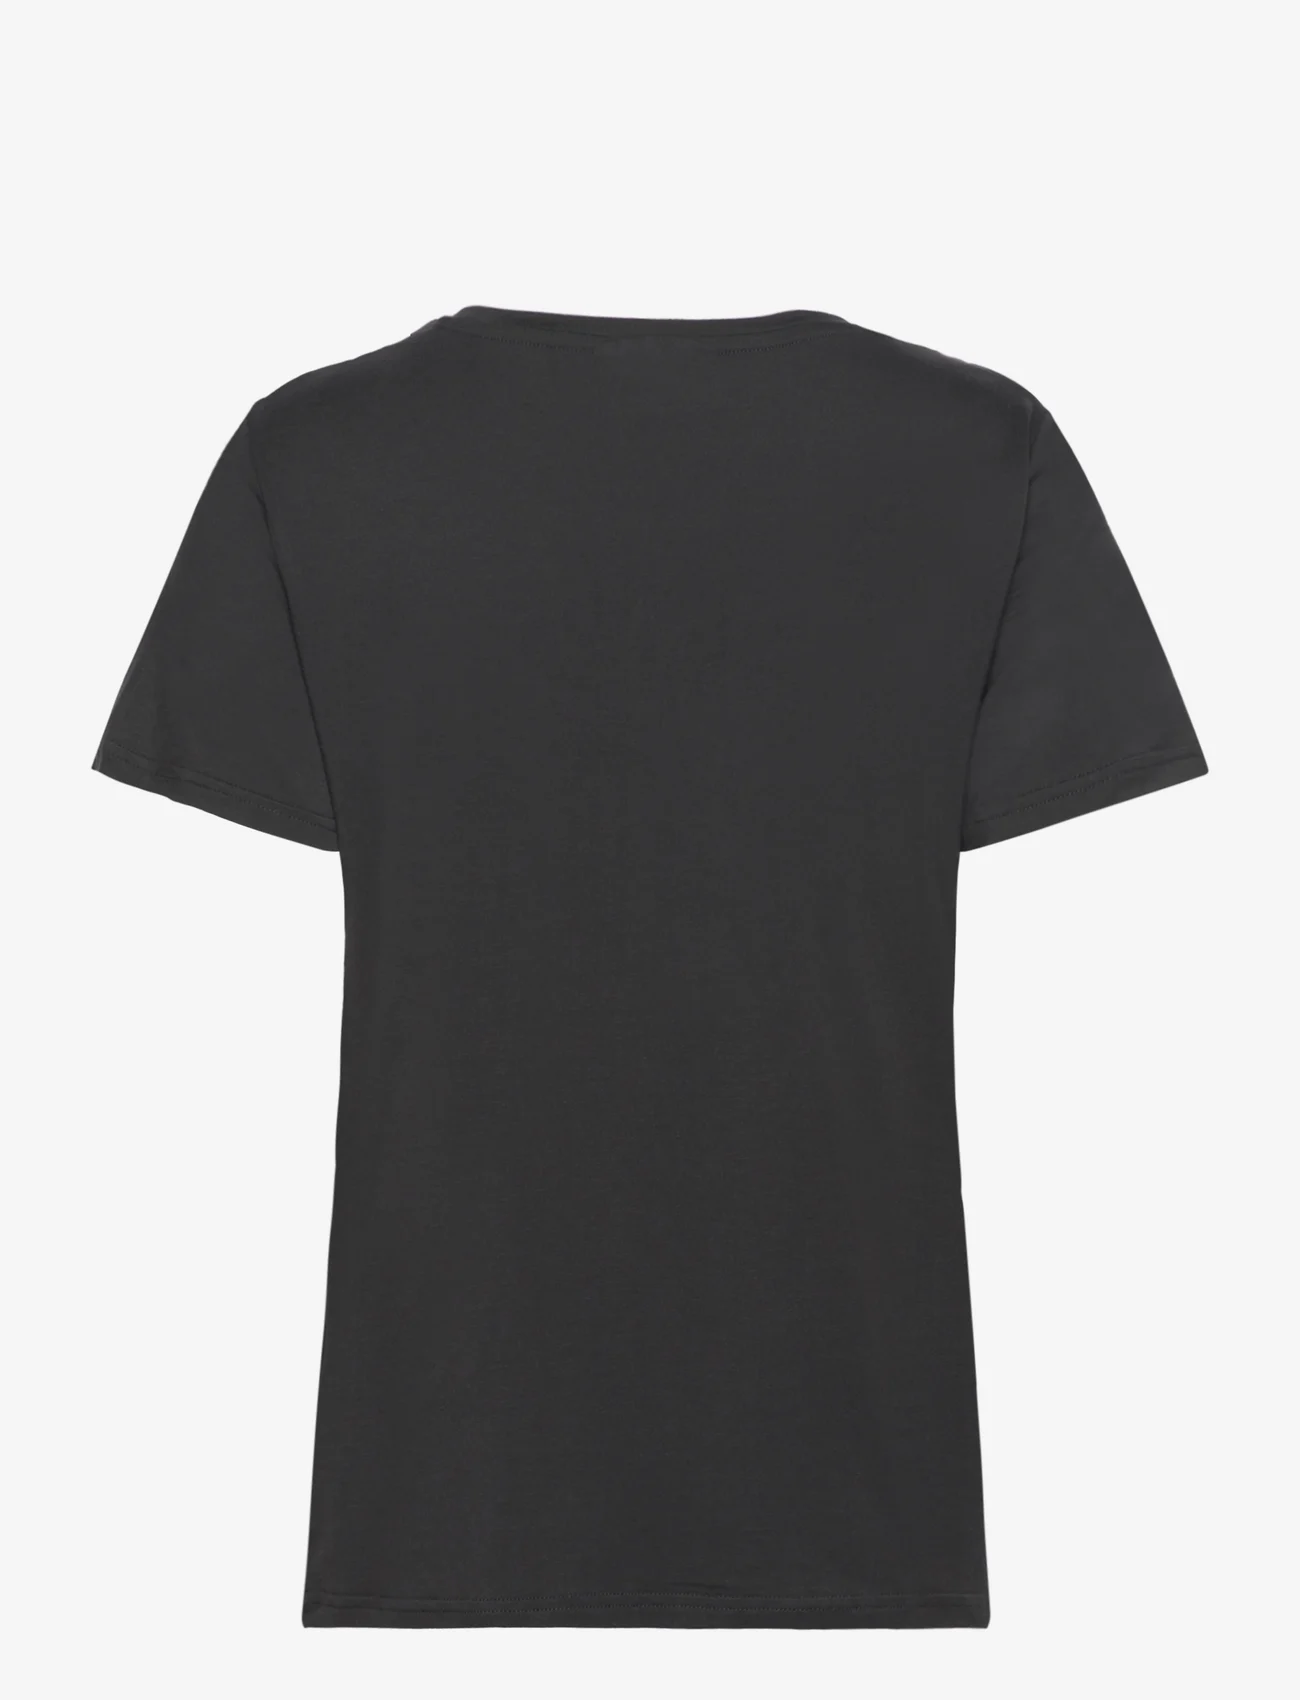 Saint Tropez - AdeliaSZ V-N T-Shirt - lägsta priserna - black - 1